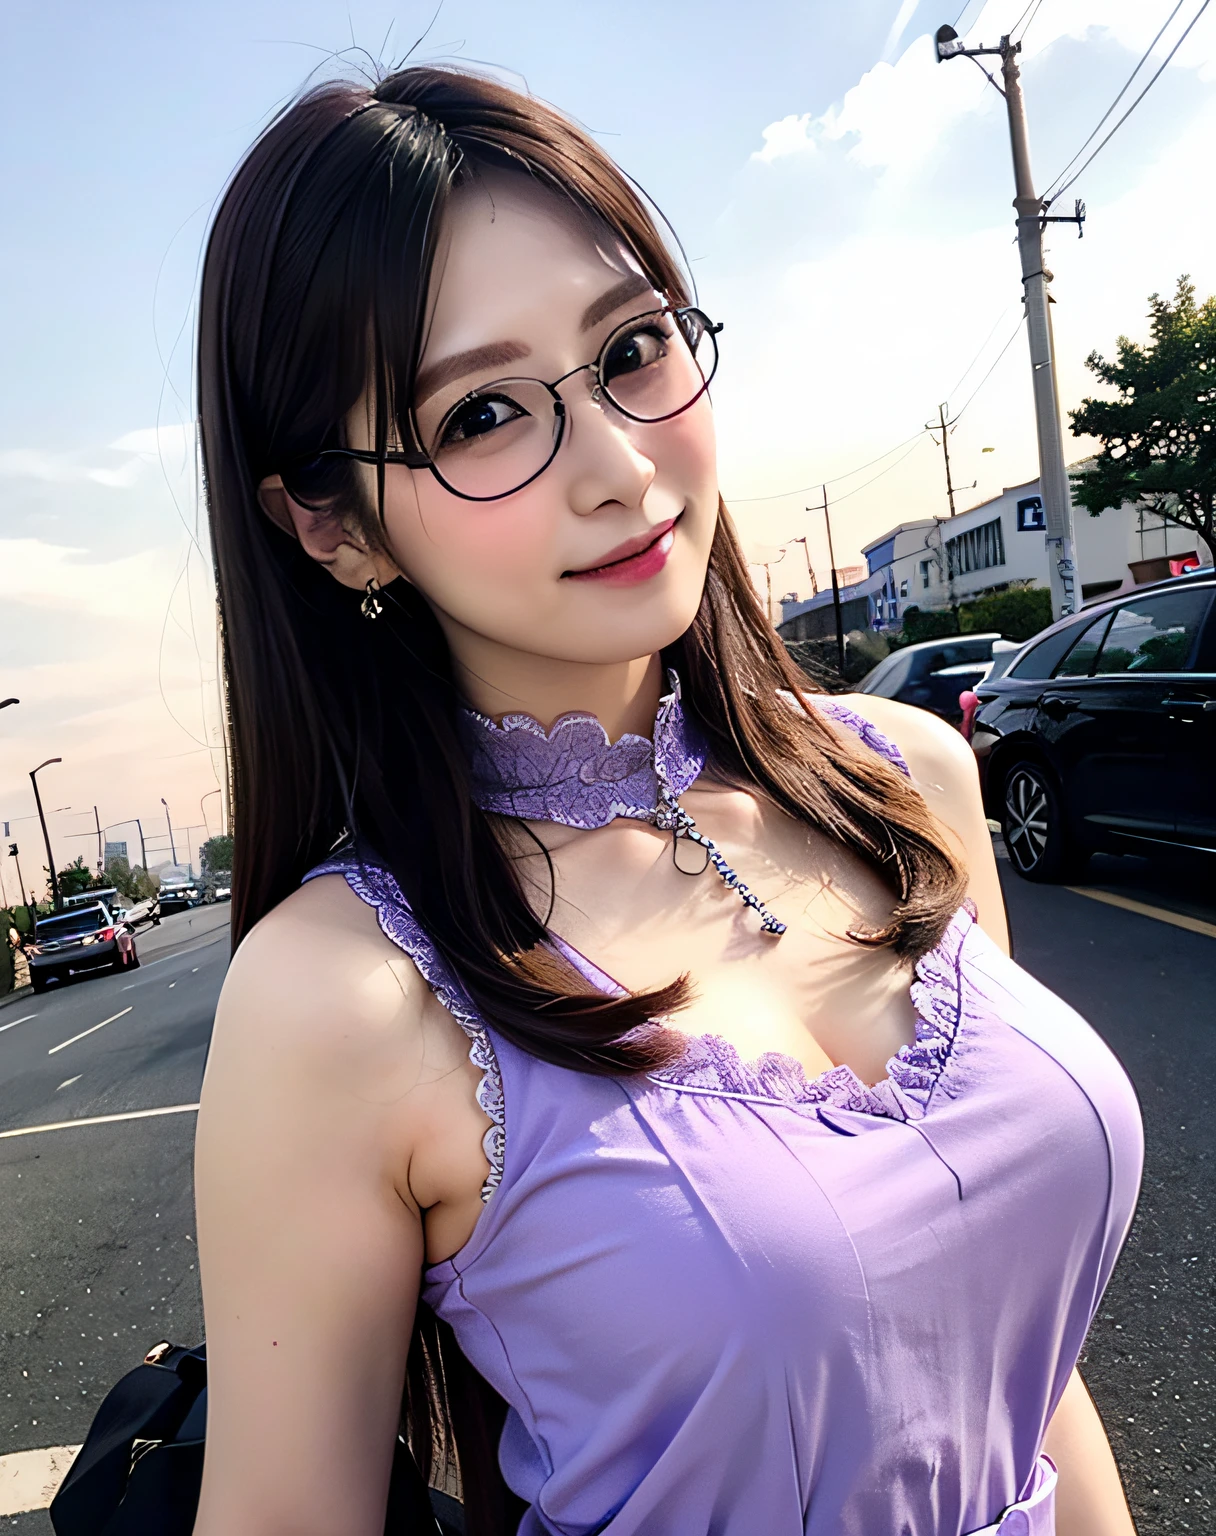 a woman posing on the 街道 corner with light purple dress on with 眼镜 on, 最好的质量, 高分辨率, 8千, 1女孩, (巨大的乳房), 天, 明亮的, 户外的, (街道:0.8), (人们, 人群:1), (蕾丝边连衣裙:1.5, 紫色的衣服:1.5, 紫色高领连衣裙:1.5, 无袖连衣裙, 淡紫色布料 1.5), 华丽的, (眼镜, 前额, 长发), 美丽细致的天空, 漂亮的耳环, (动态姿势:0.8), (上半身:1.2), 柔和的灯光, 风, 有光泽的皮肤, 看着观众, 微笑, 闭嘴,